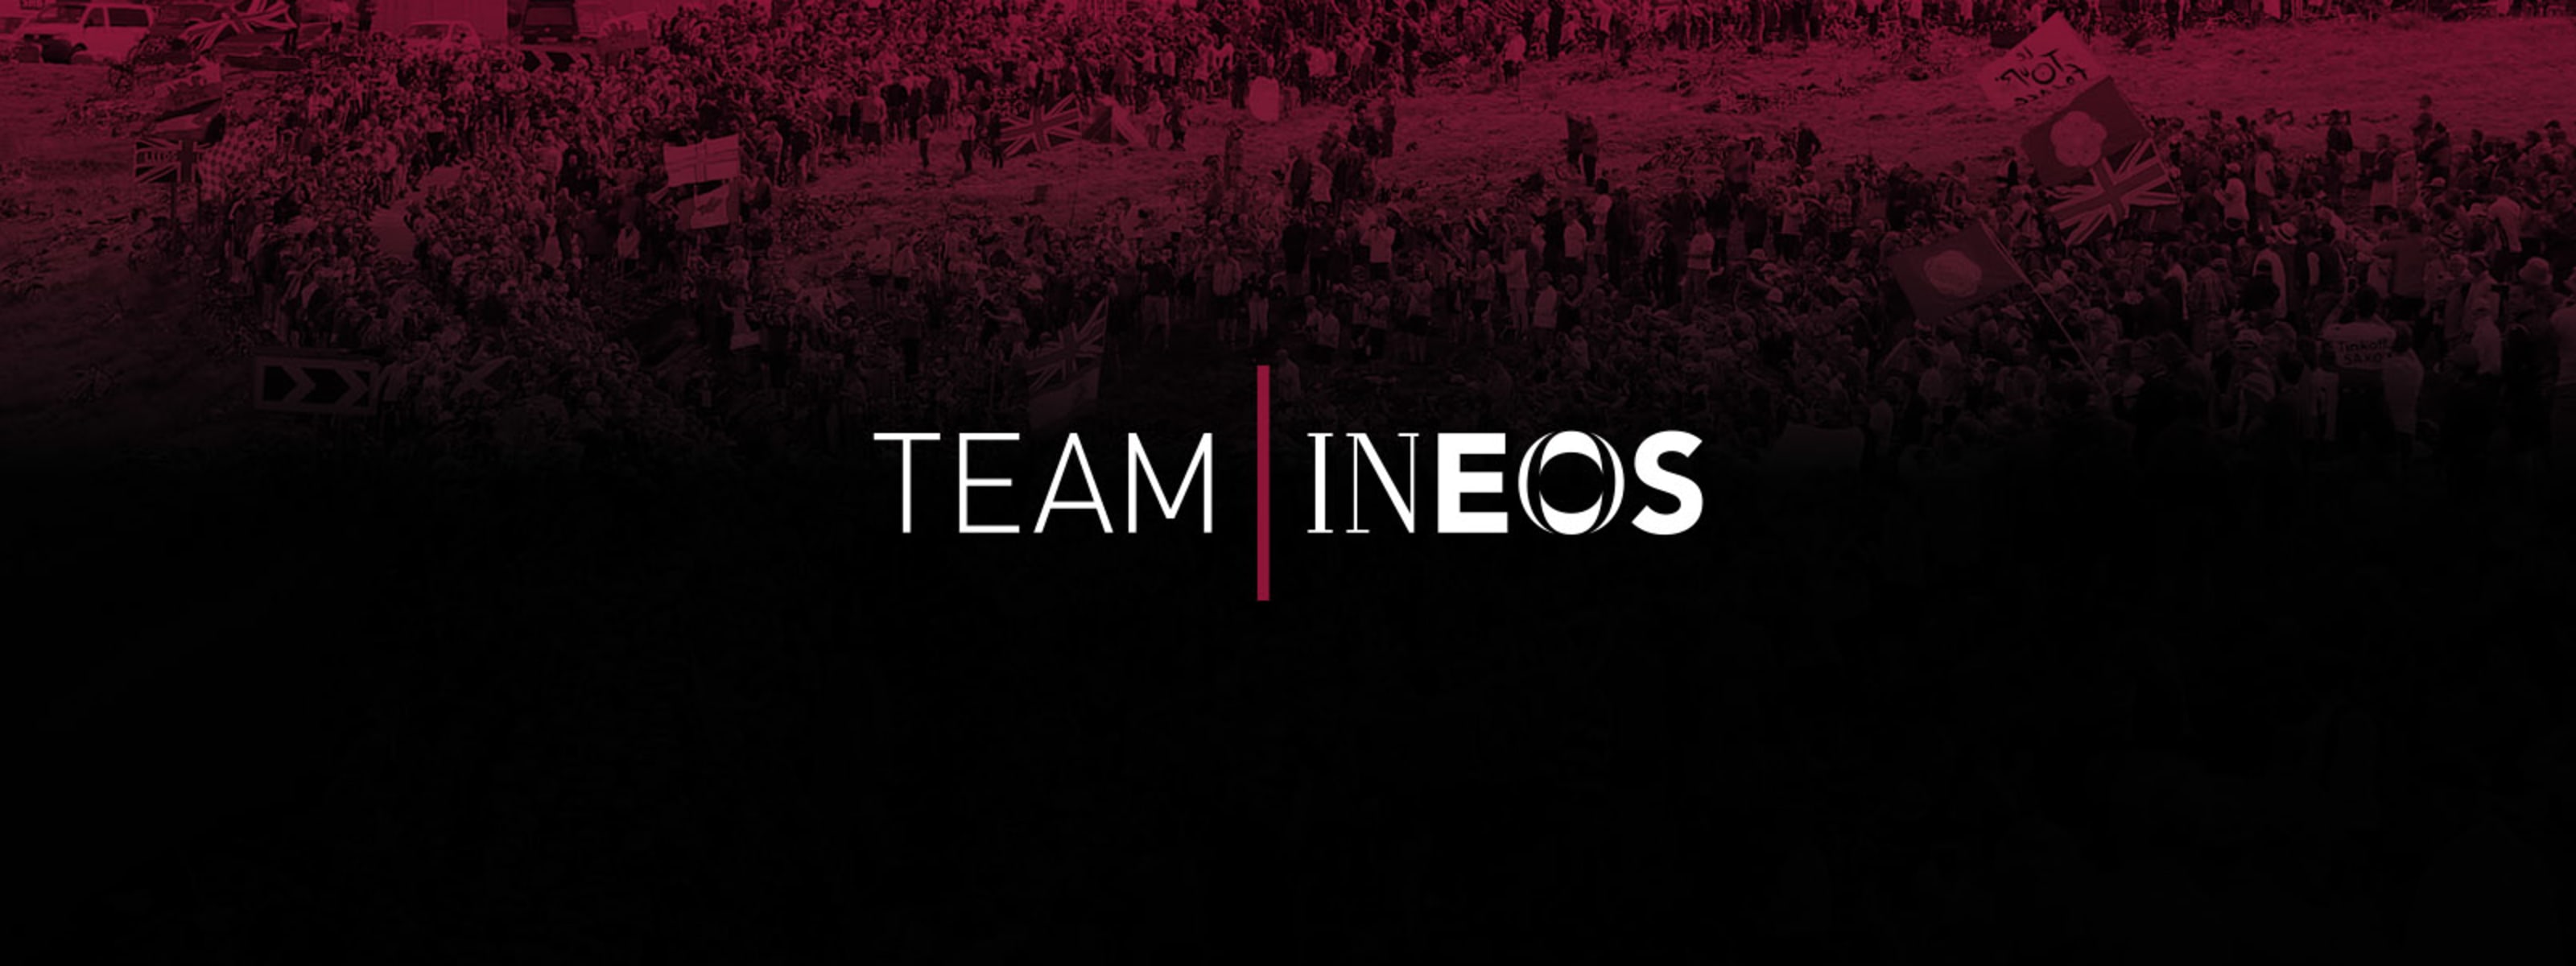 Team Ineos logo